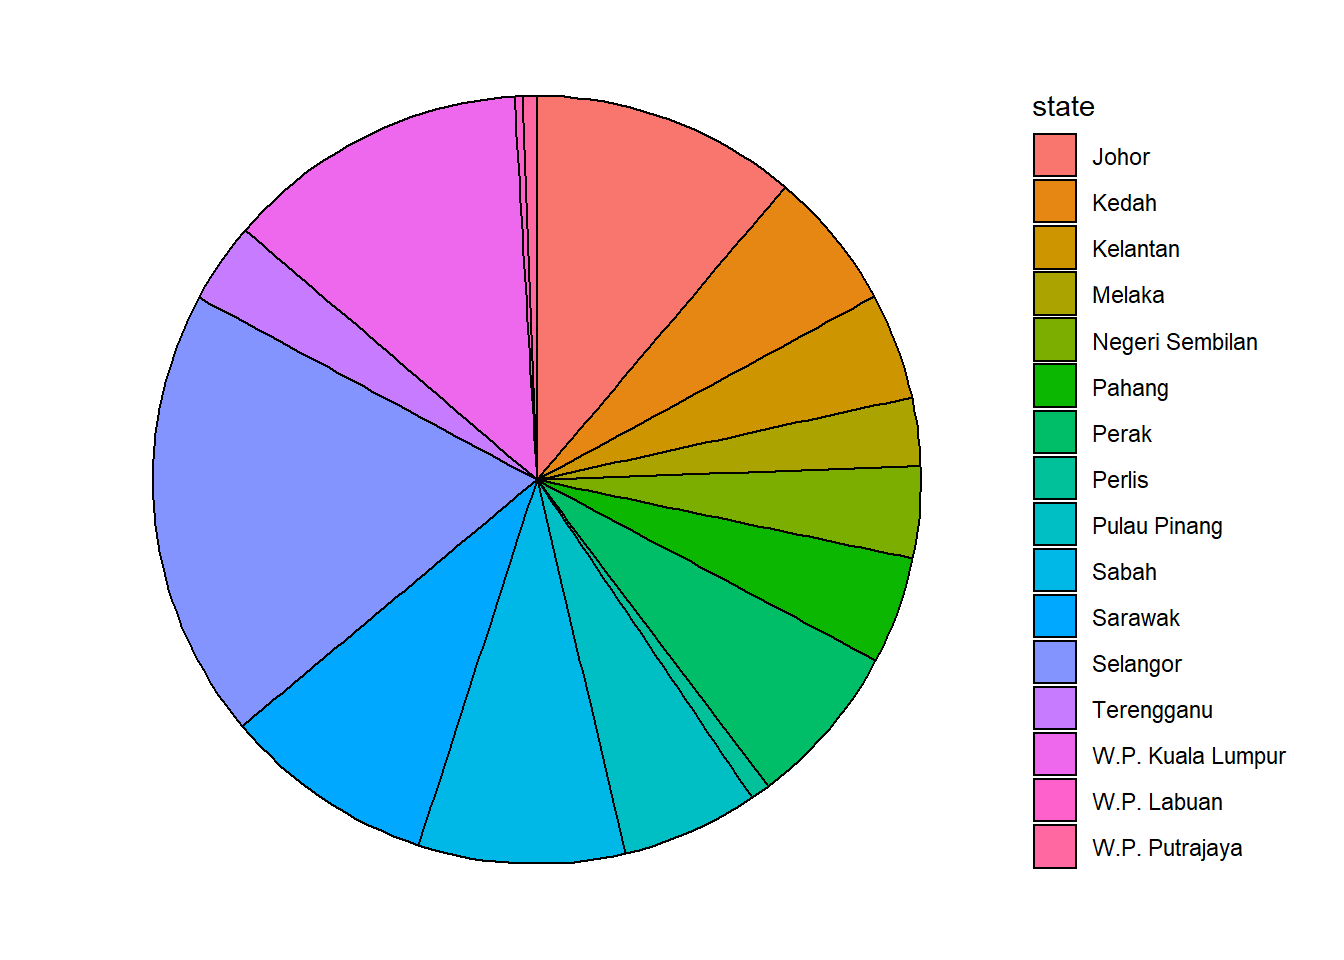 Simple pie chart